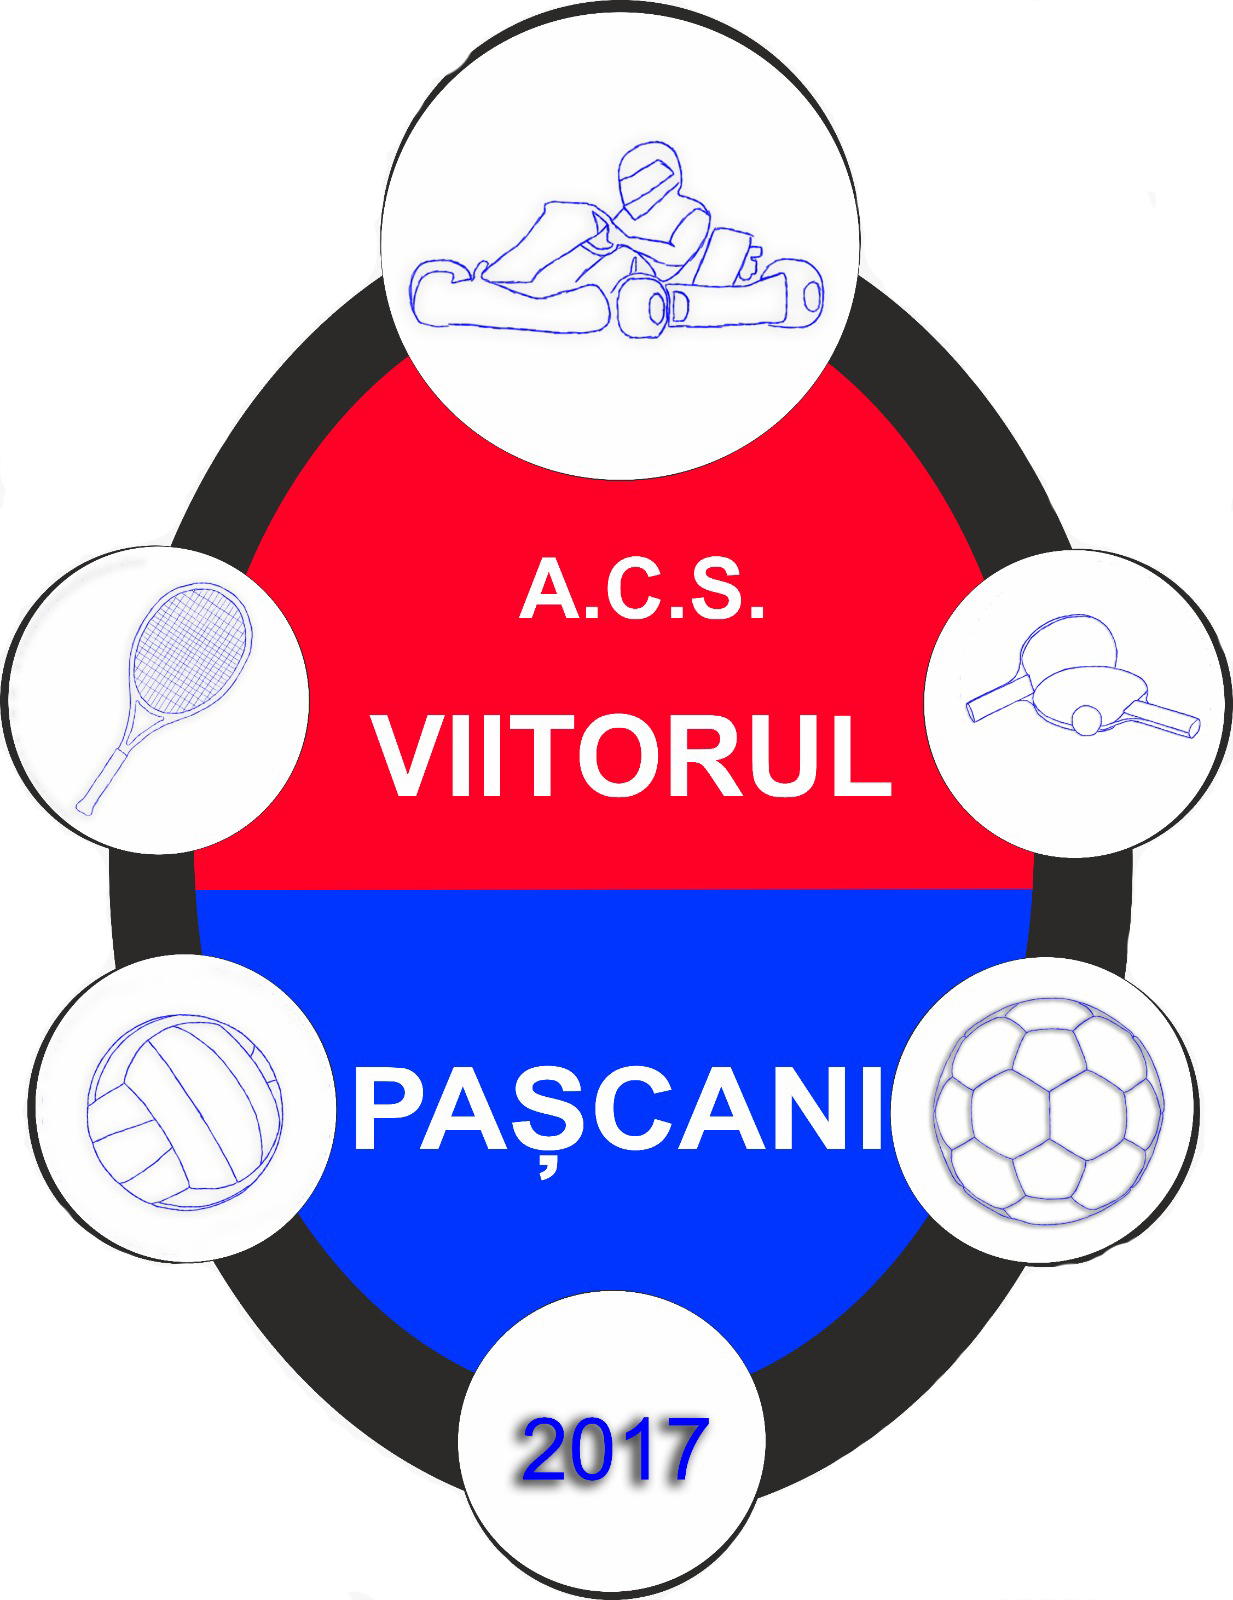 A.C.S. VIITORUL2017 PASCANI